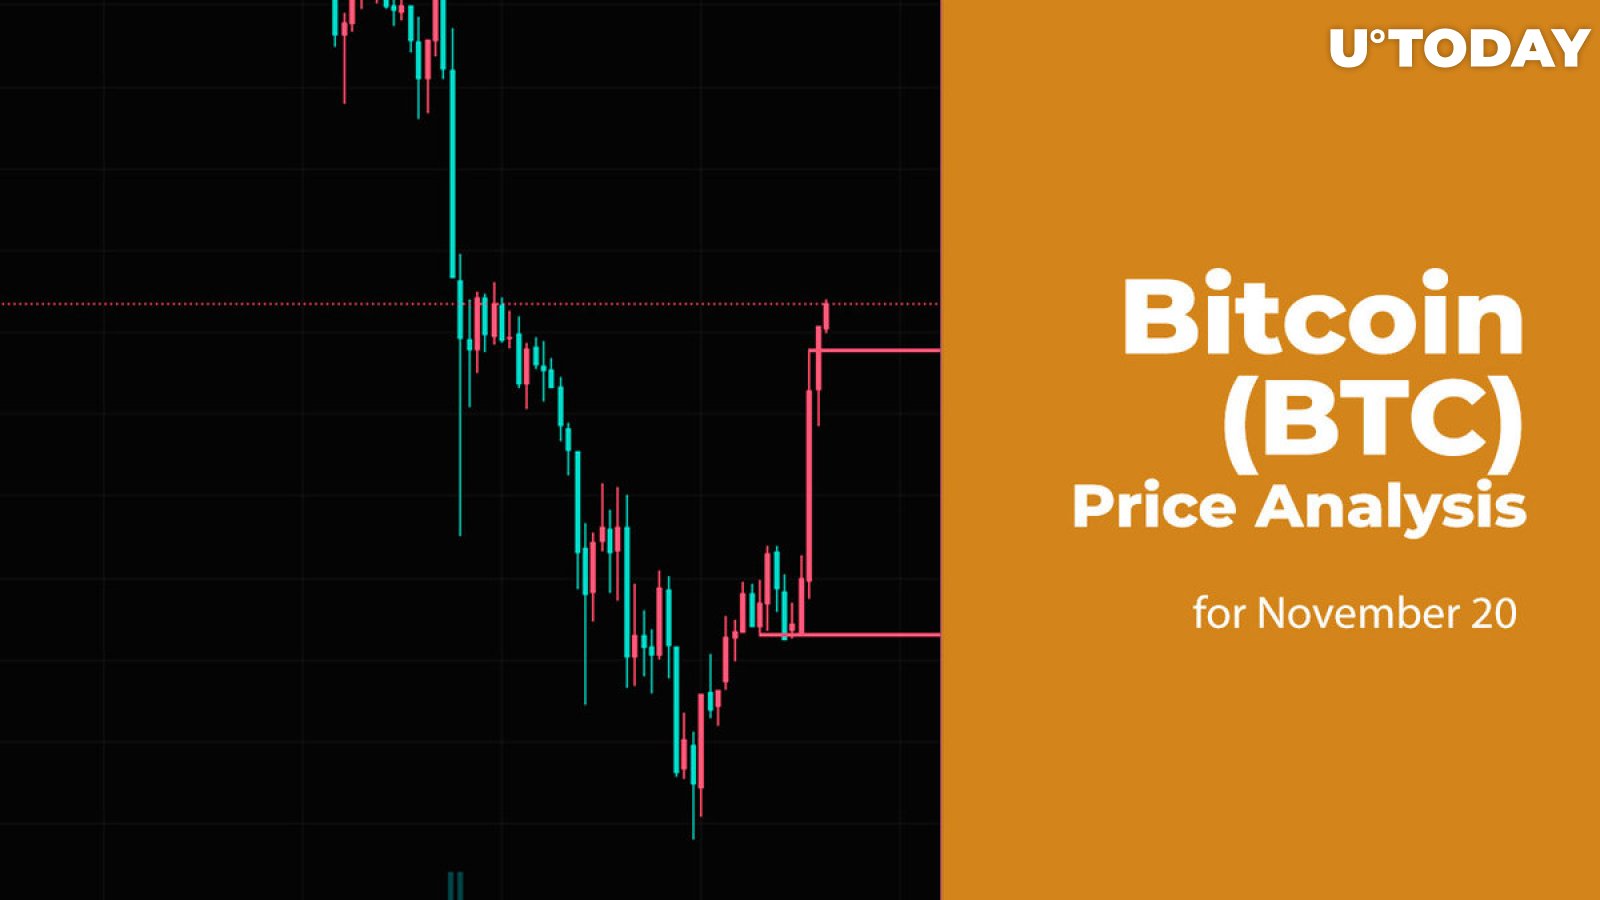 Bitcoin (BTC) Price Analysis for November 20